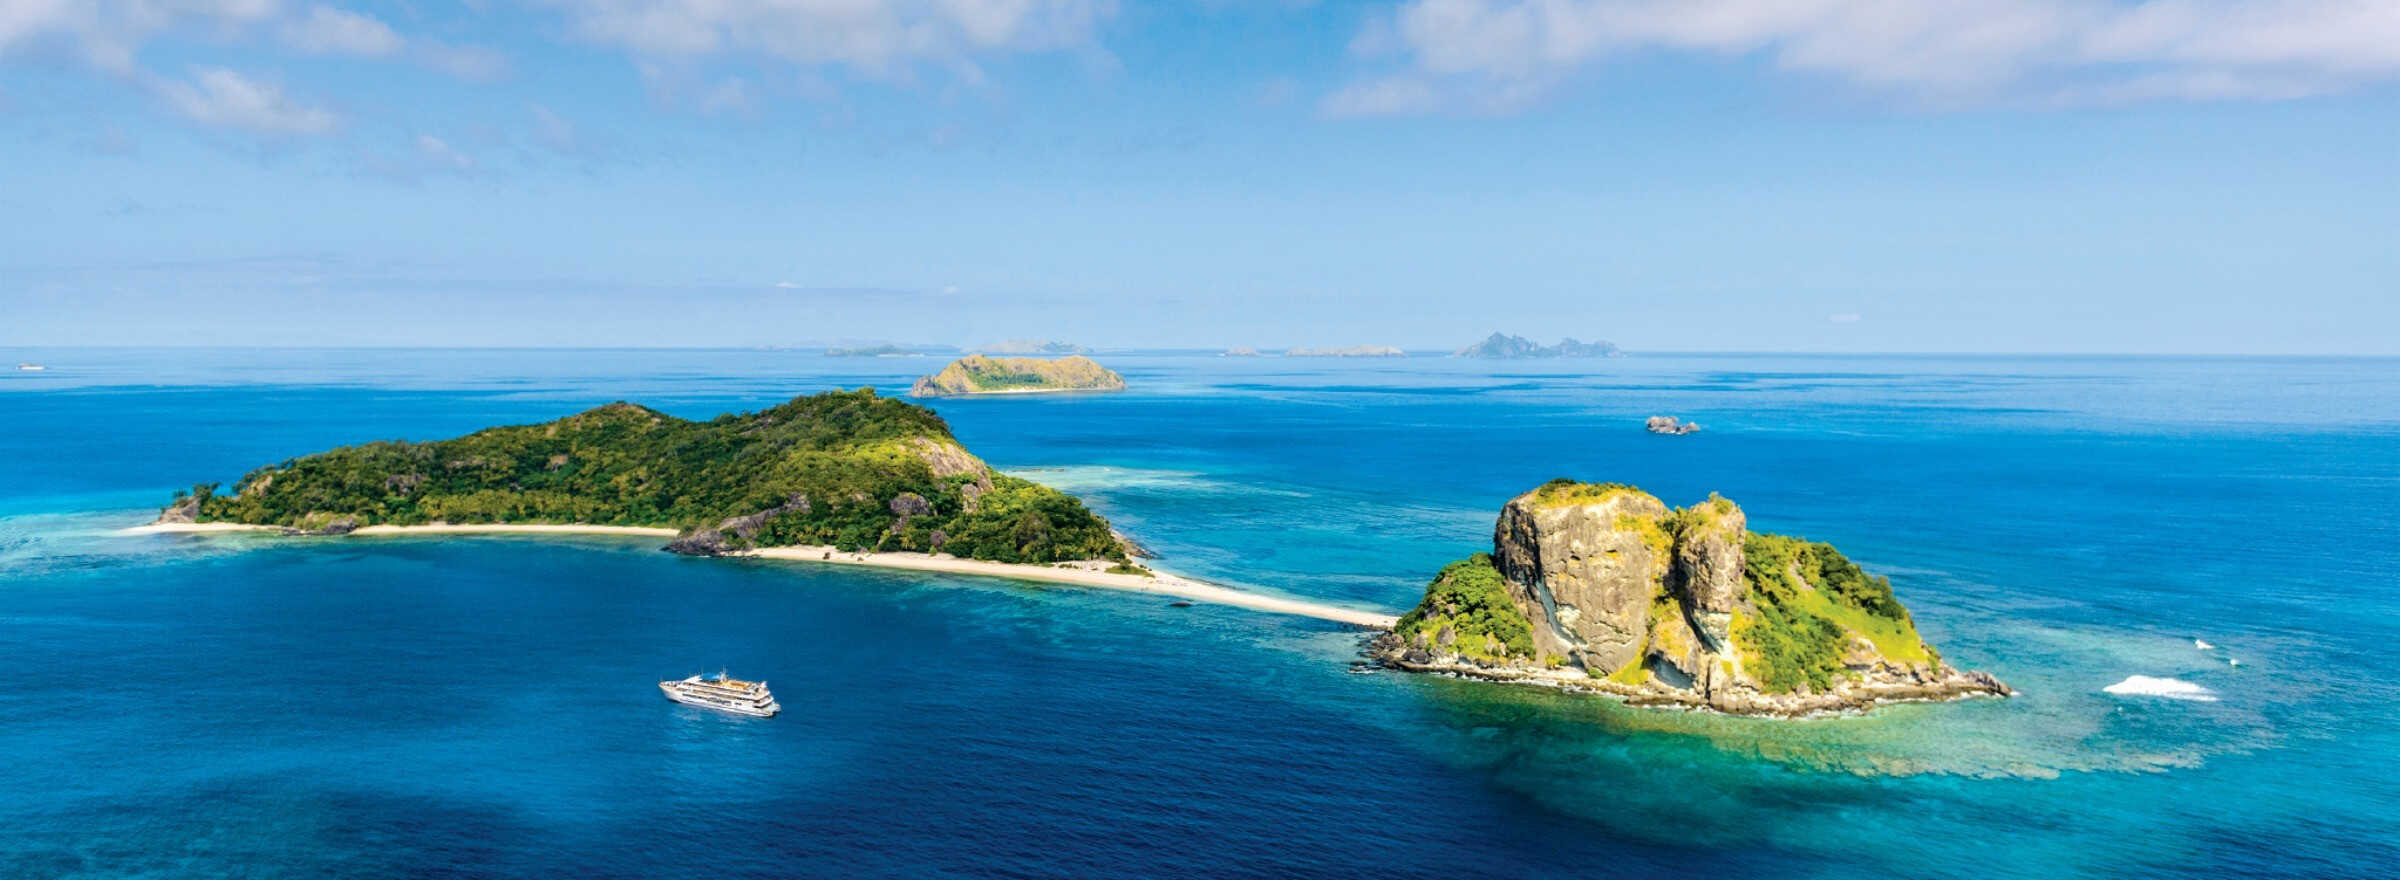 Top Mamanuca Island Attractions